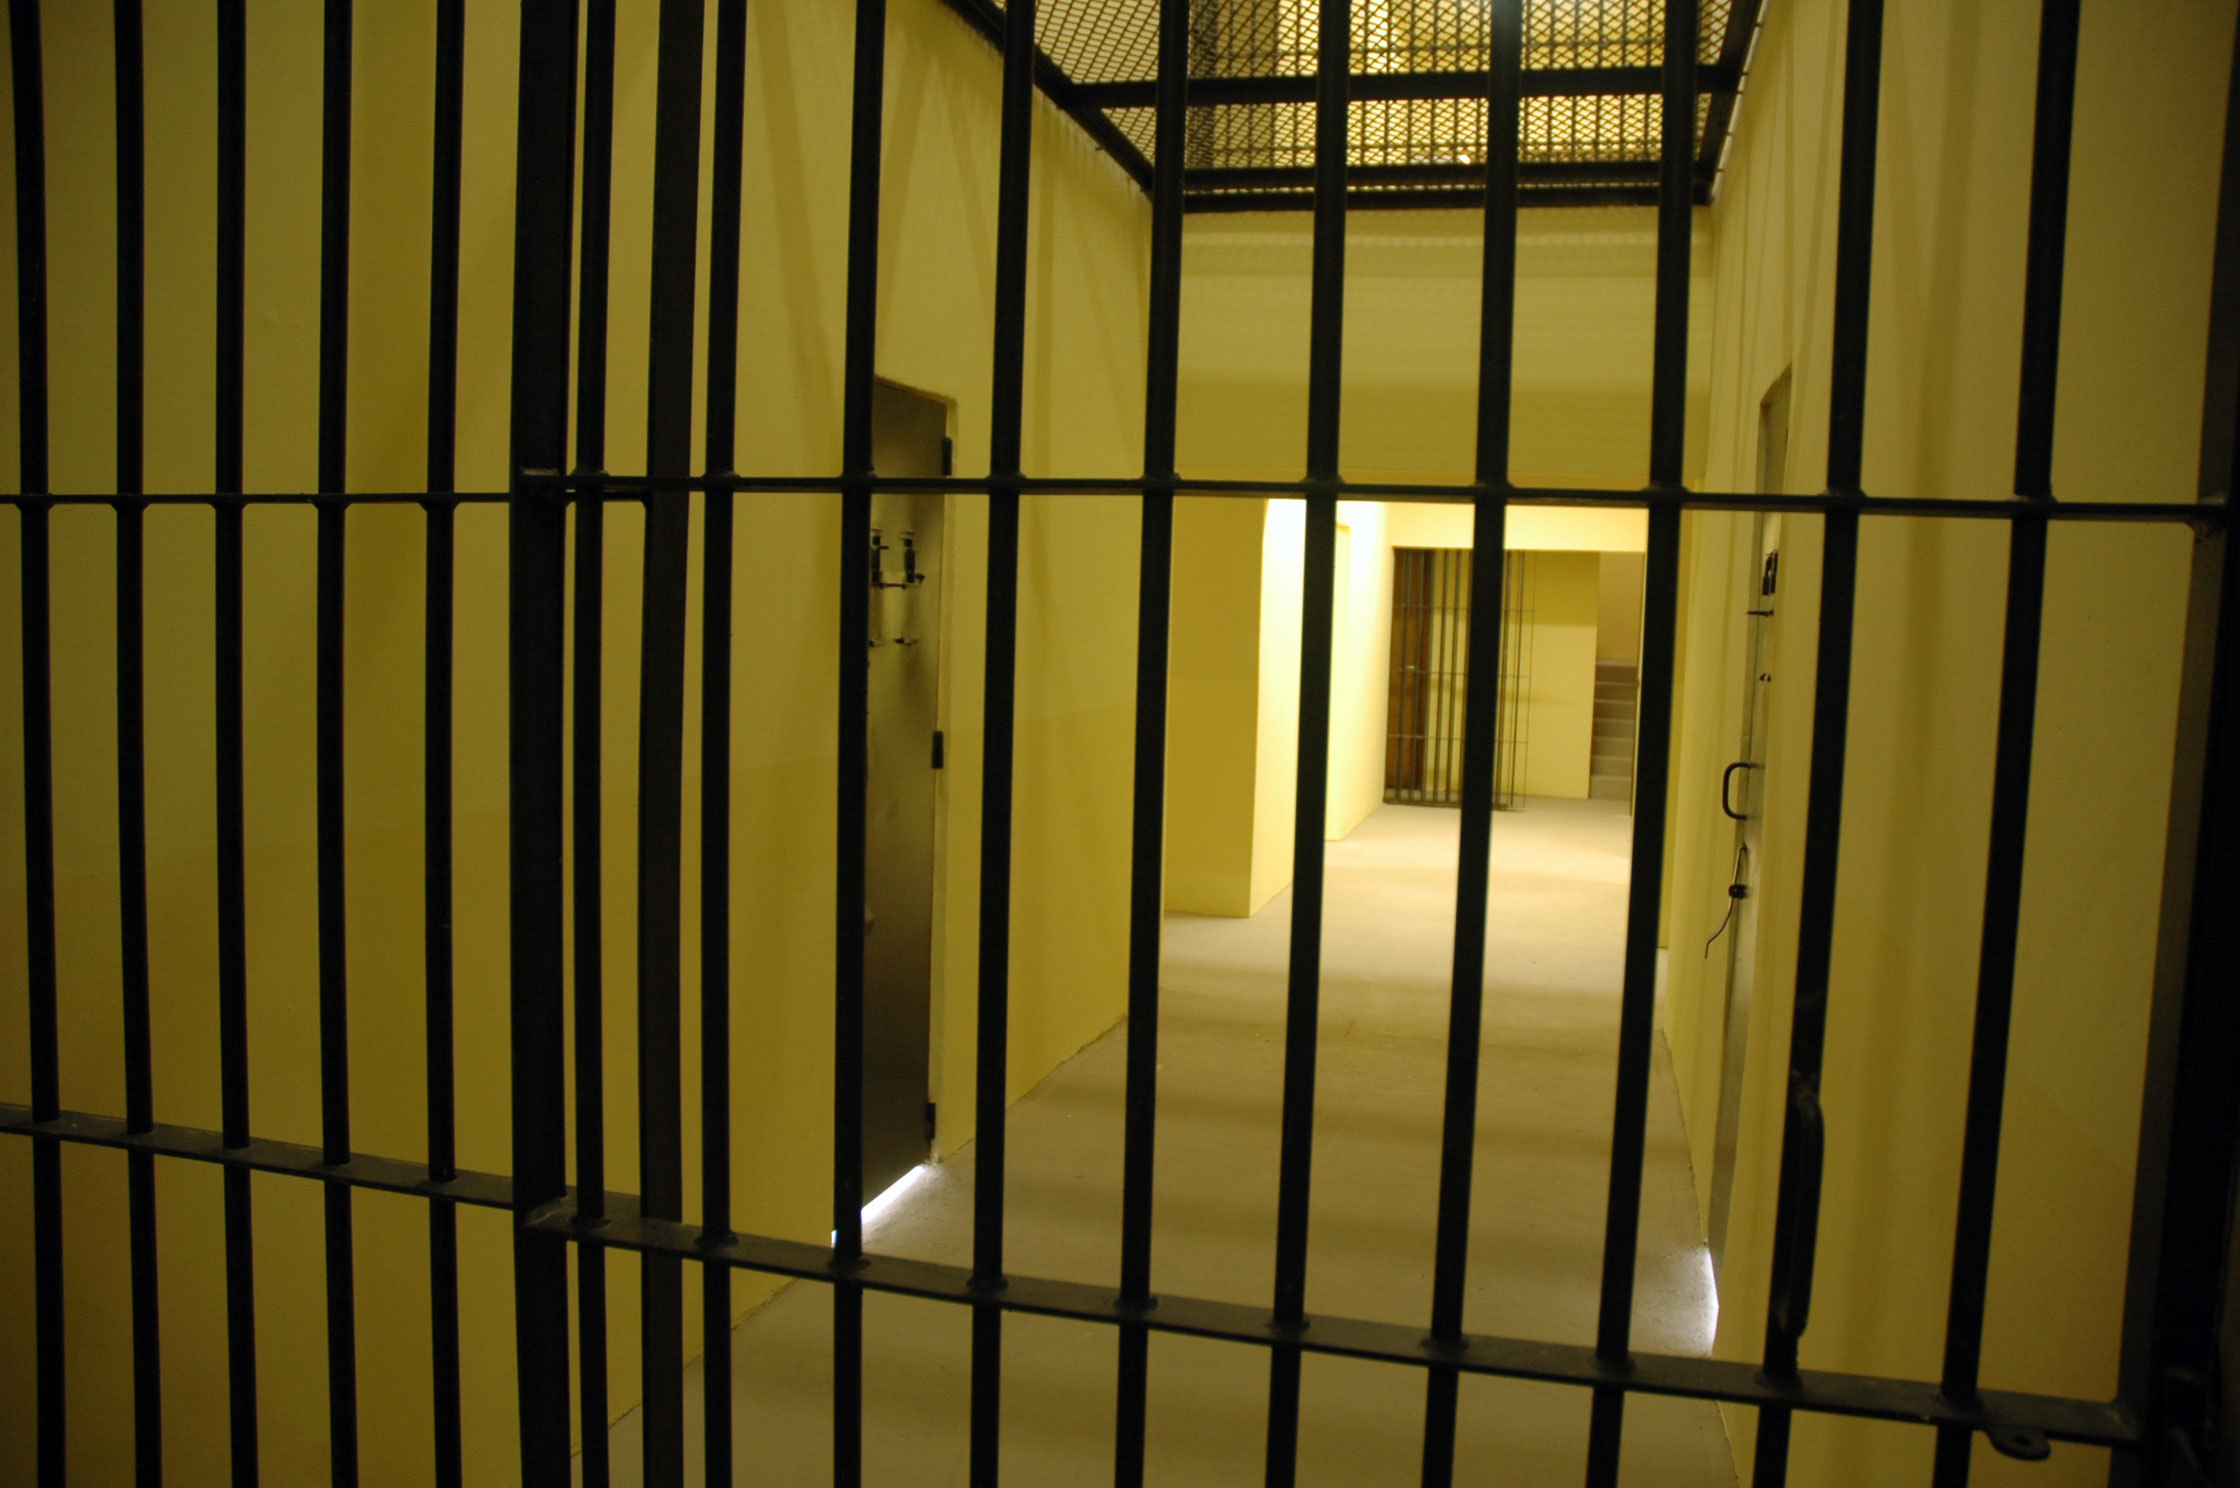 Image of prison bars